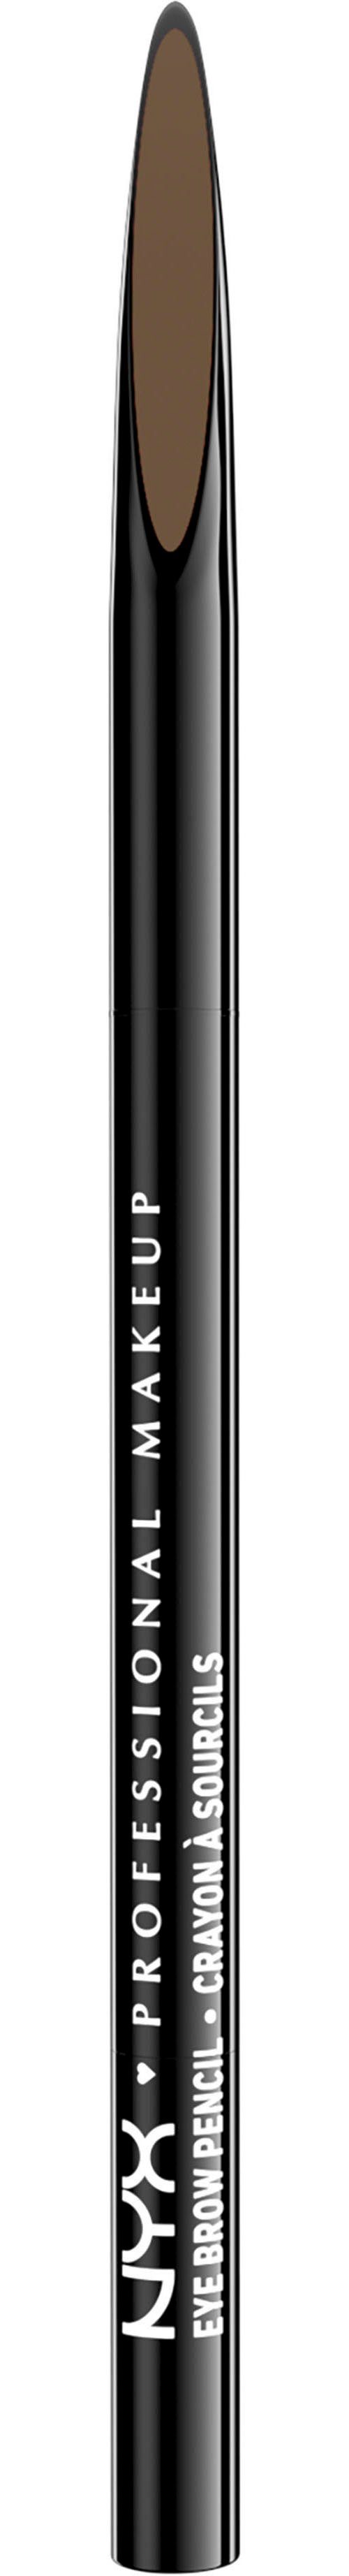 NYX Augenbrauen-Stift Pencil Professional Brow taupe Precision Makeup